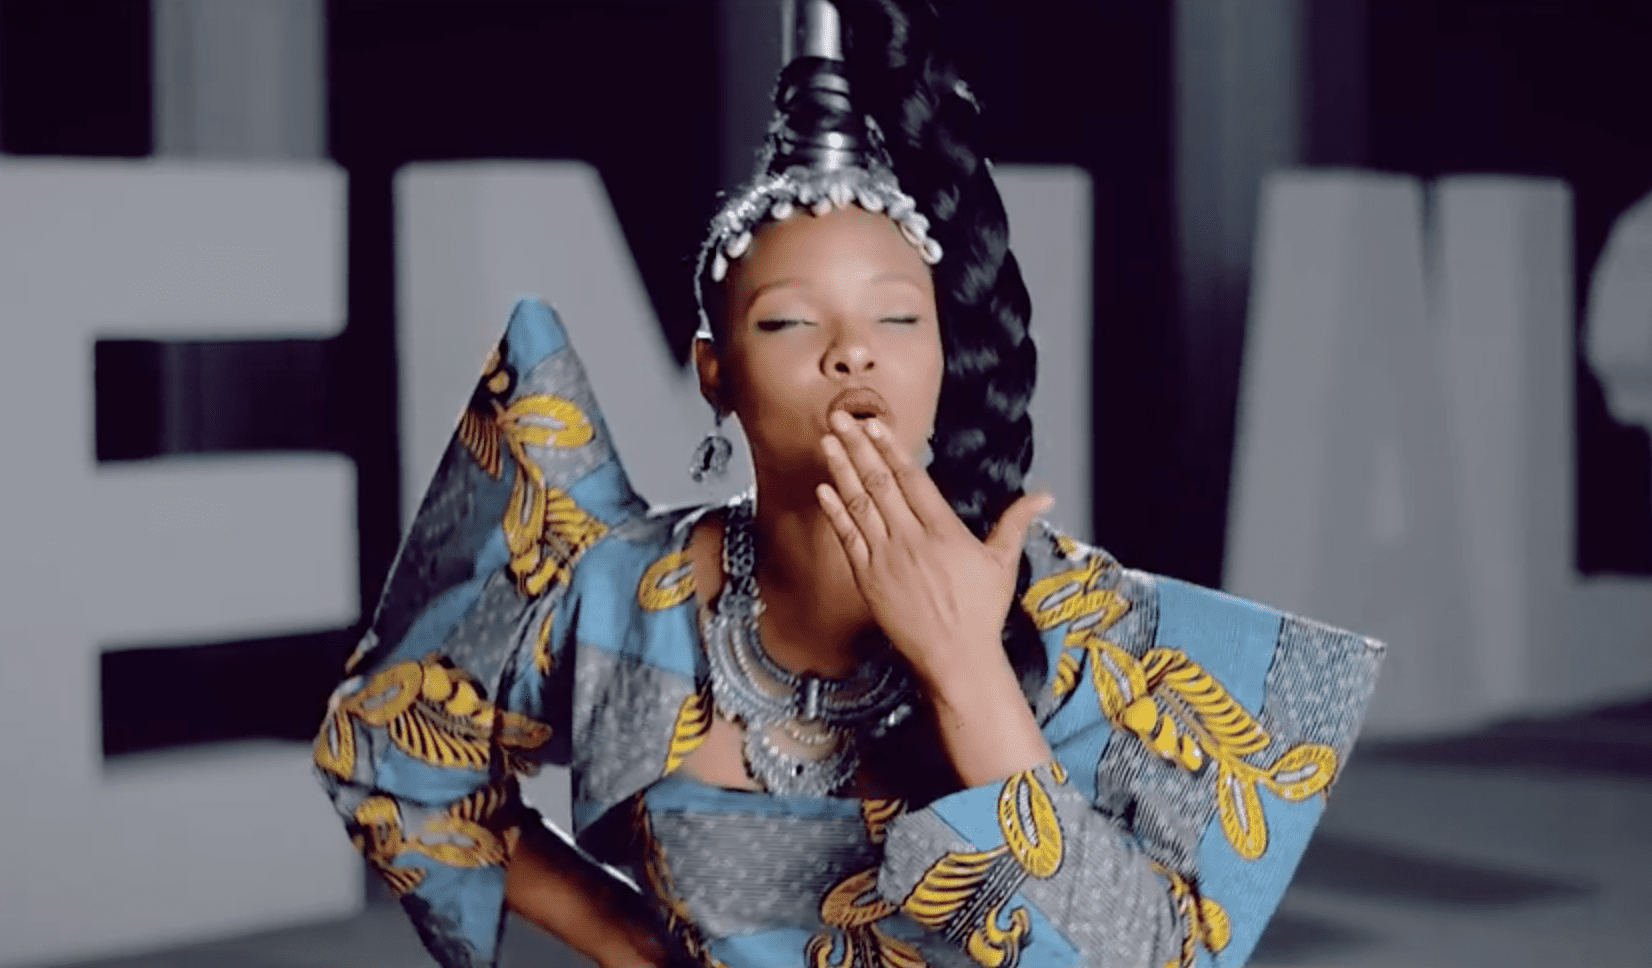 Watch Yemi Alade’s Video for “Knack Am” off her Black Magic Album